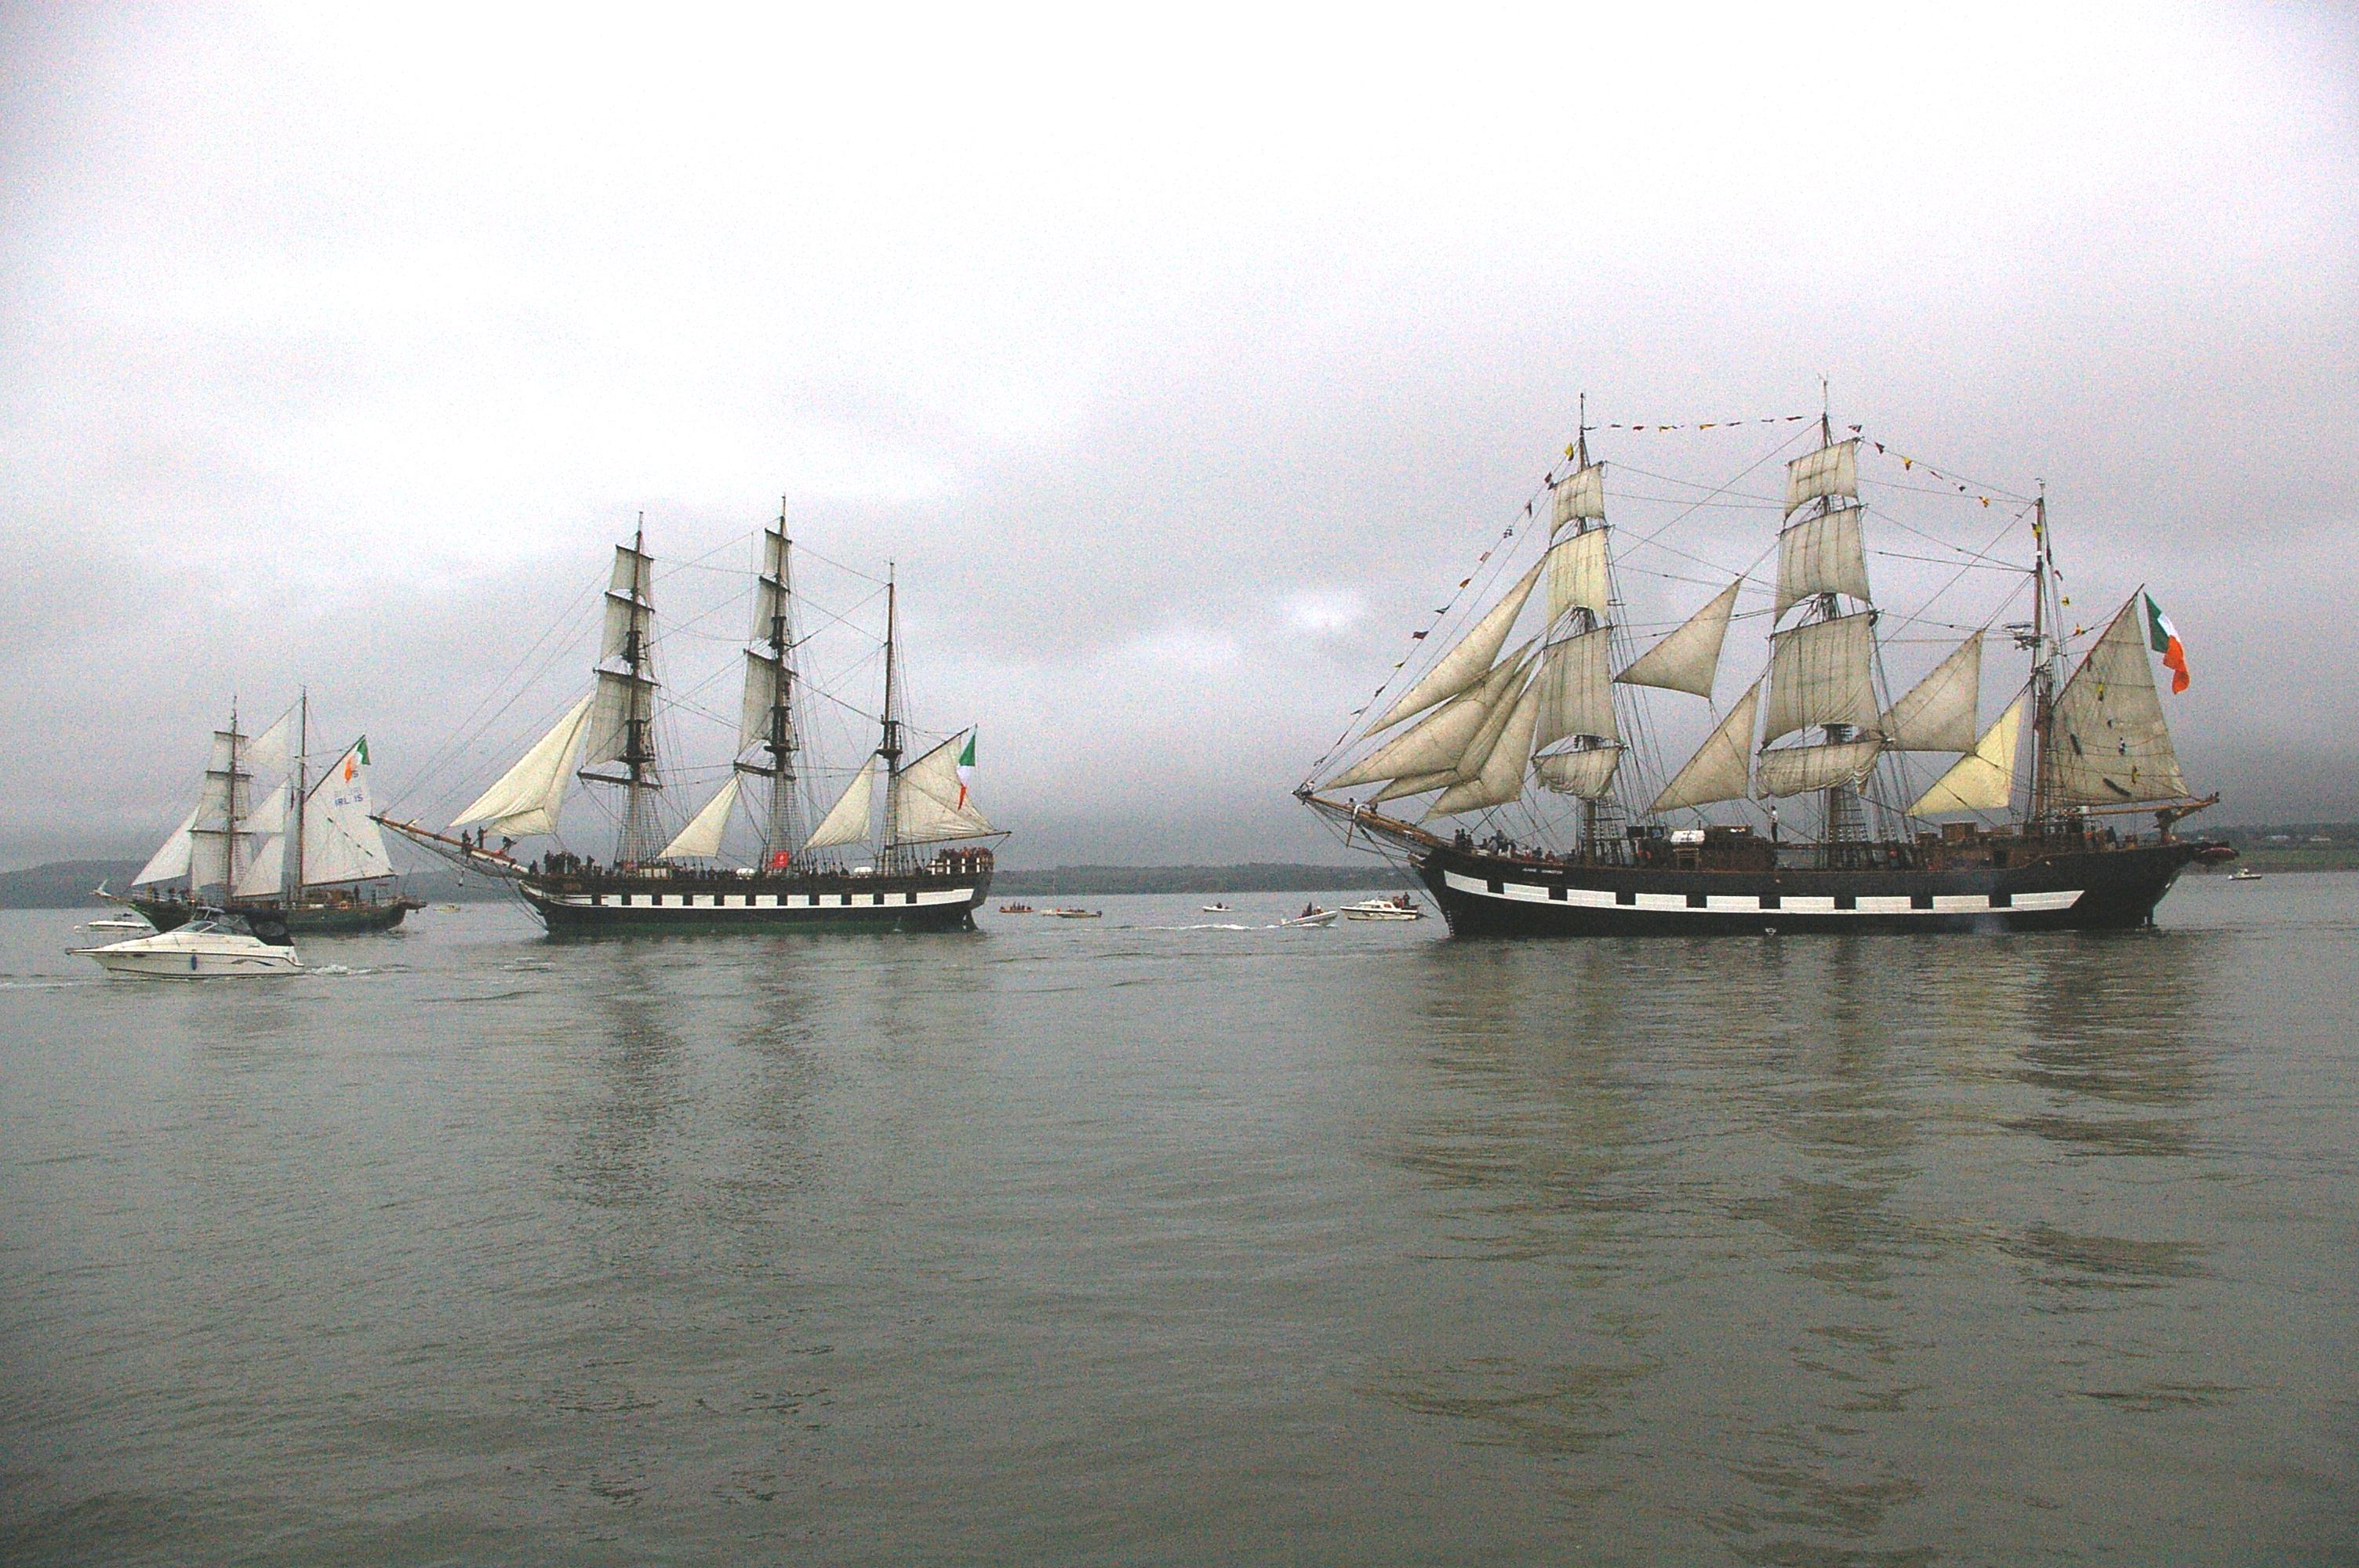 The three Irish tall ships passing Duncannon Fort